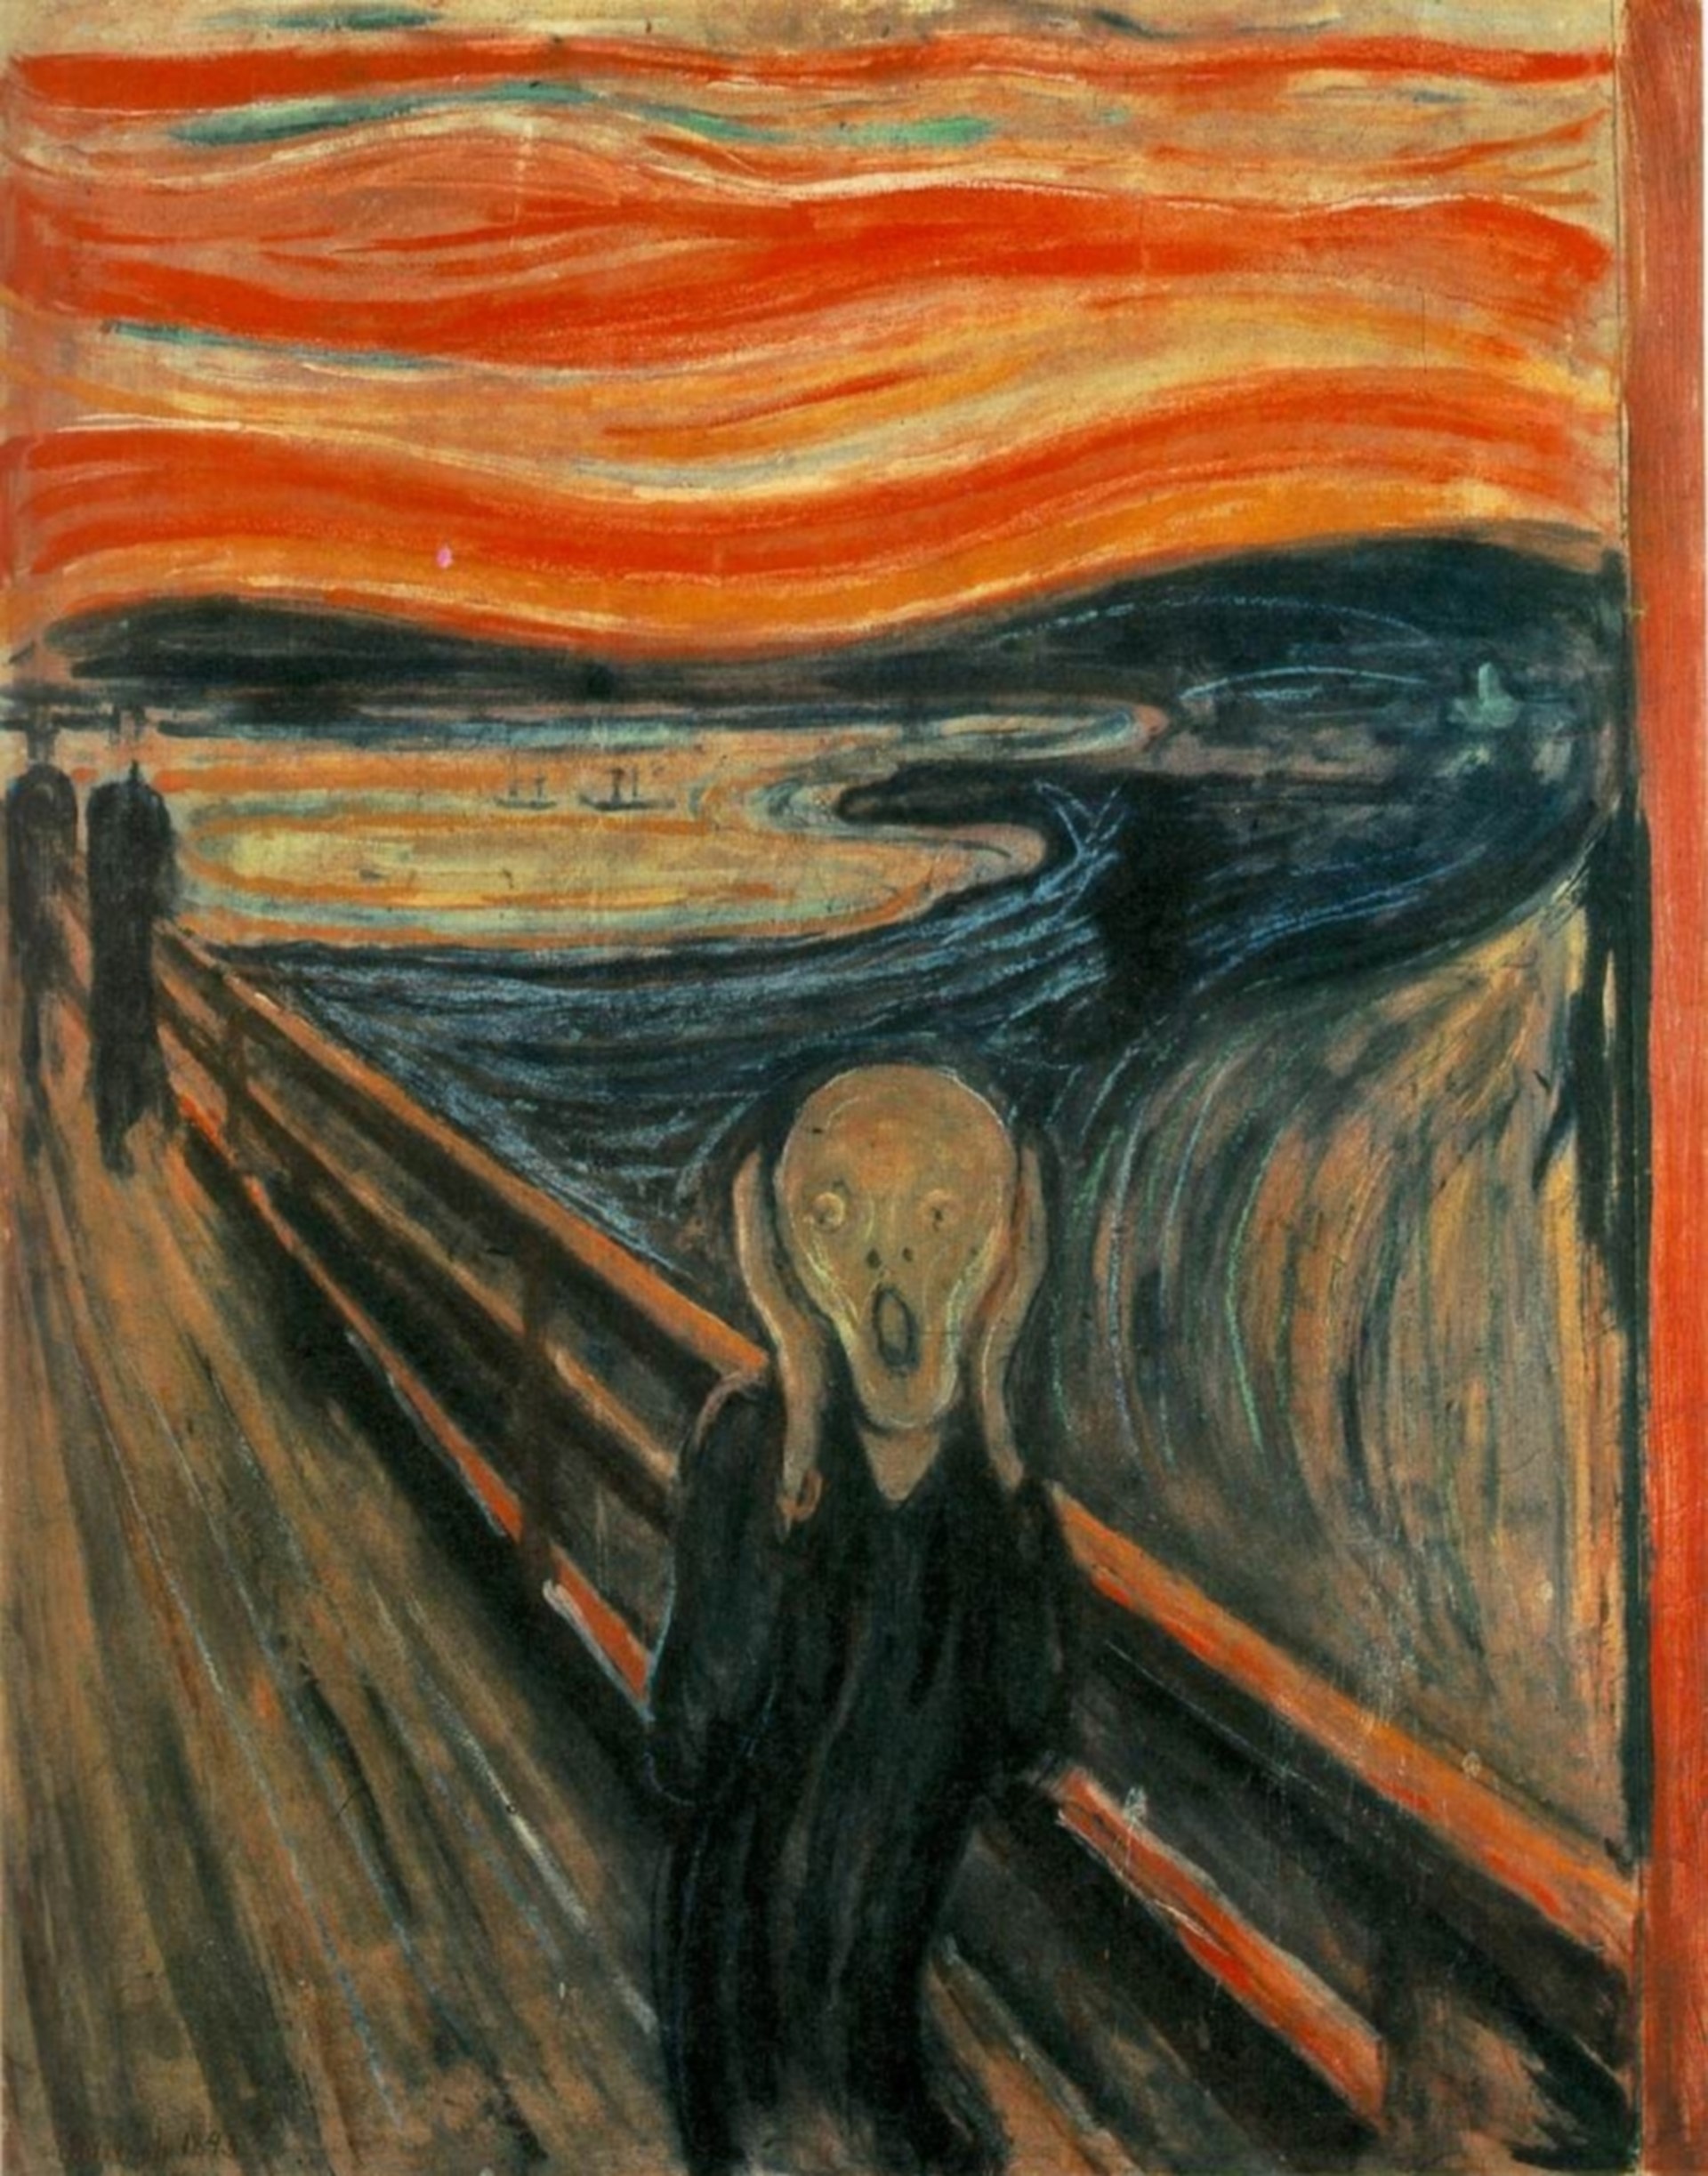 https://upload.wikimedia.org/wikipedia/commons/thumb/f/f4/The_Scream.jpg/1920px-The_Scream.jpg